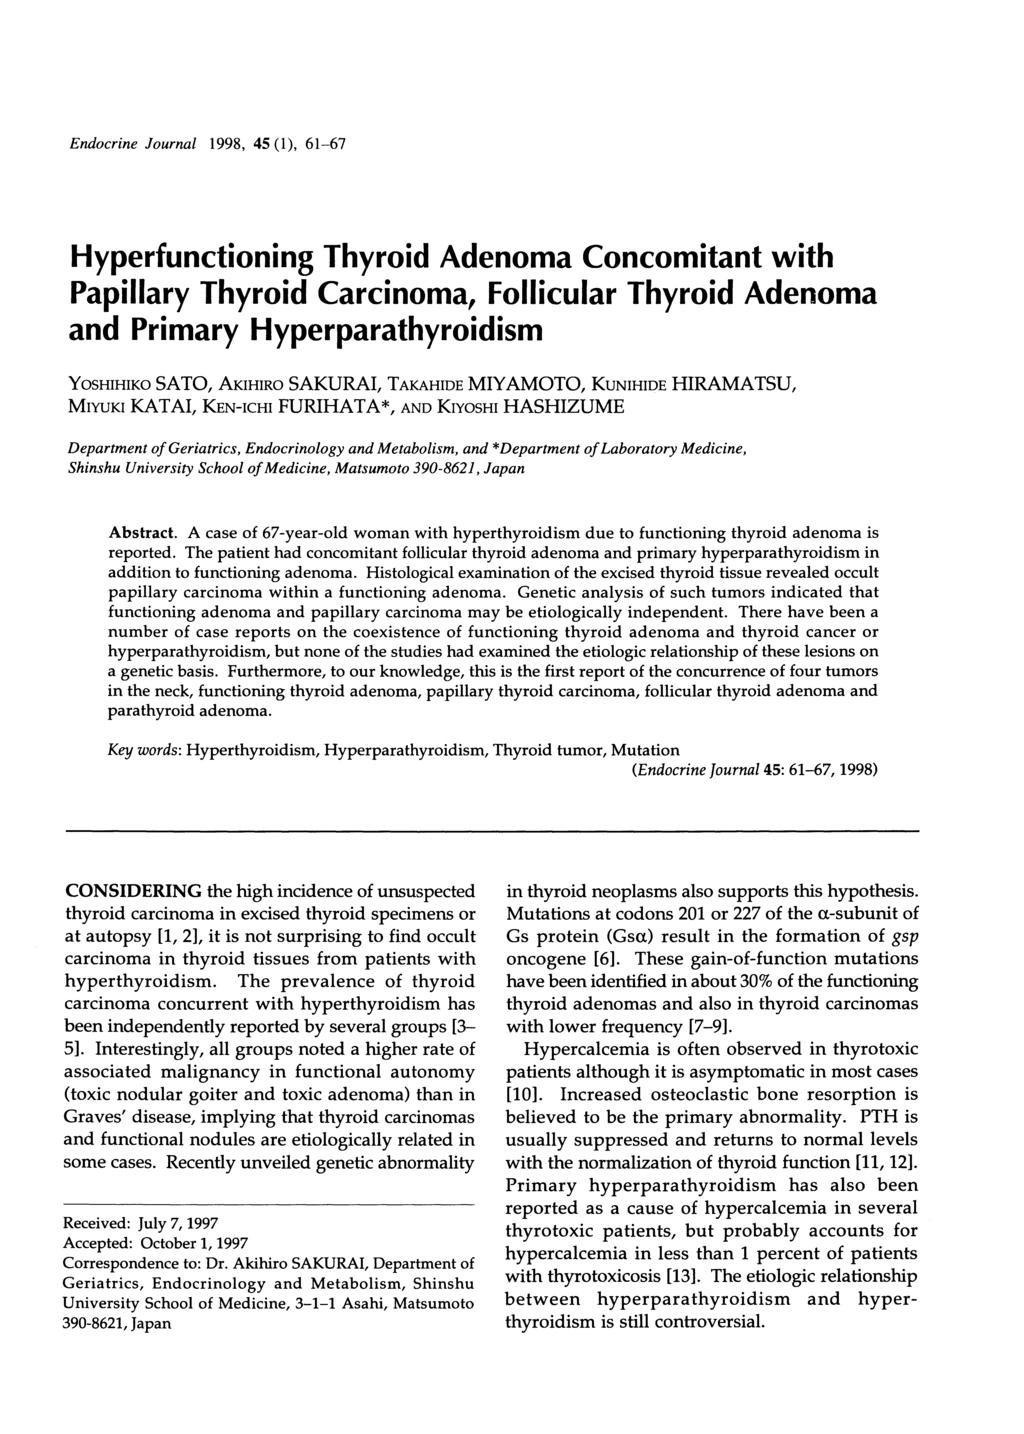 Endocrine Journal 1998, 45 (1), 61-67 Hyperfunctioning Thyroid Adenoma Concomitant with Papillary Thyroid Carcinoma, Follicular Thyroid Adenoma and Primary Hyperparathyroidism YosHIHIKO SATO, AKIHIRO